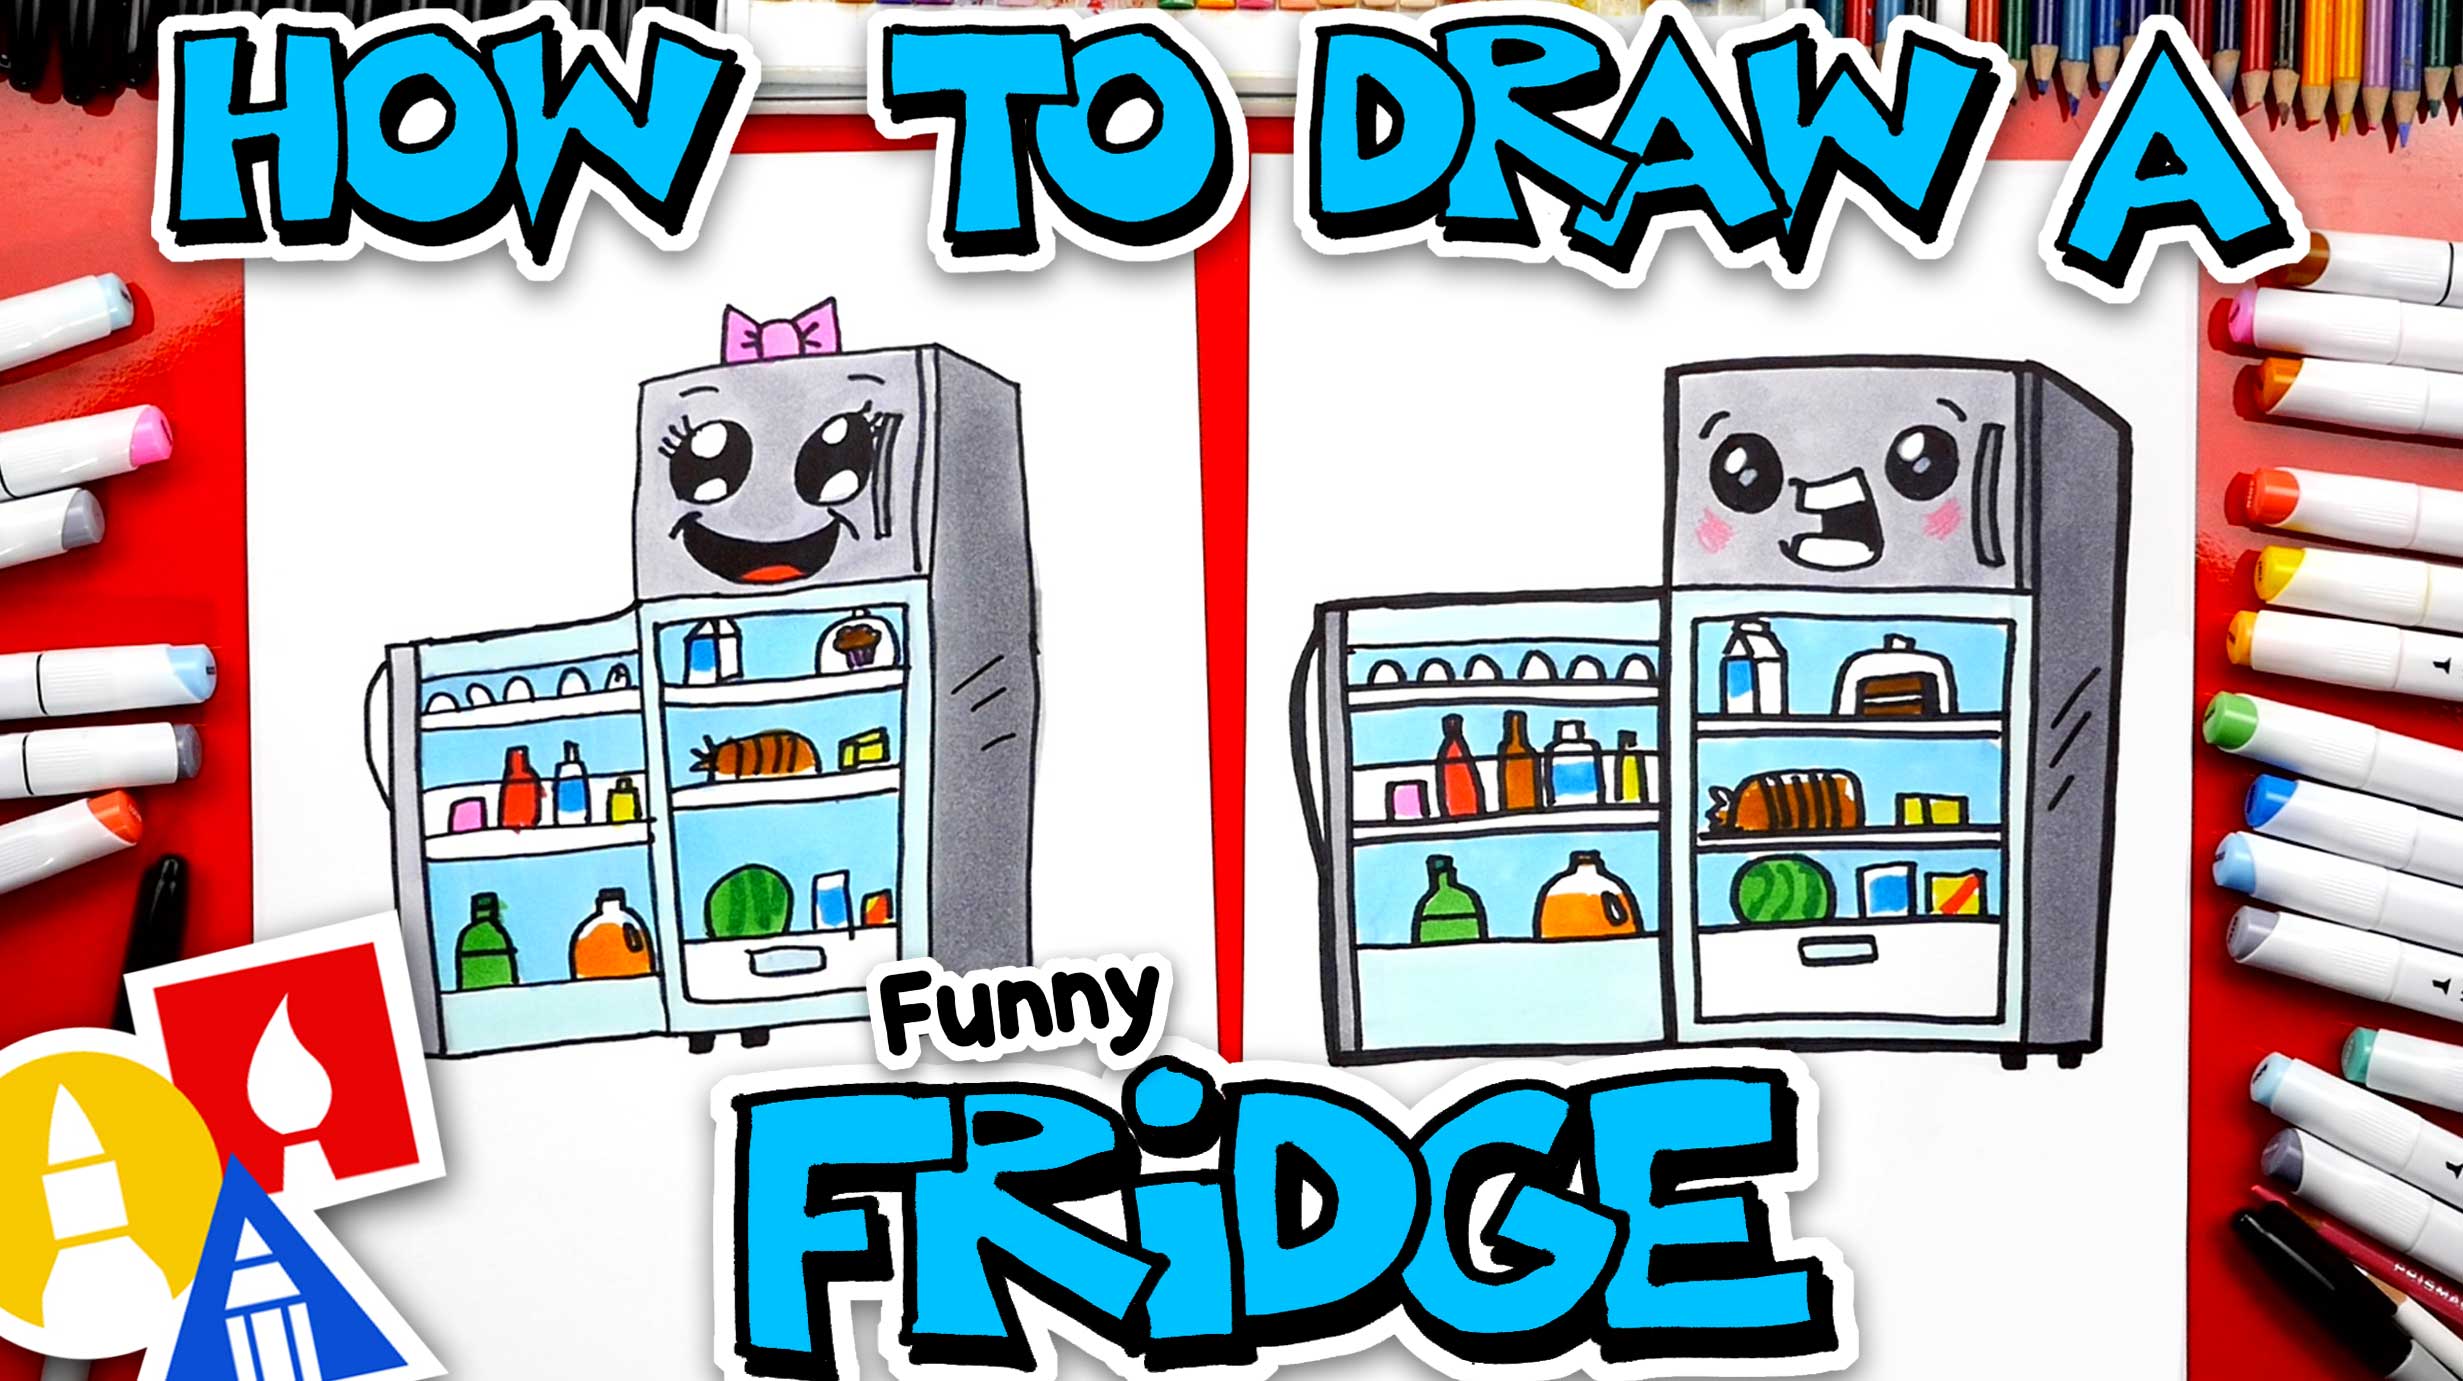 How To Draw A Funny Cartoon Fridge - Art For Kids Hub